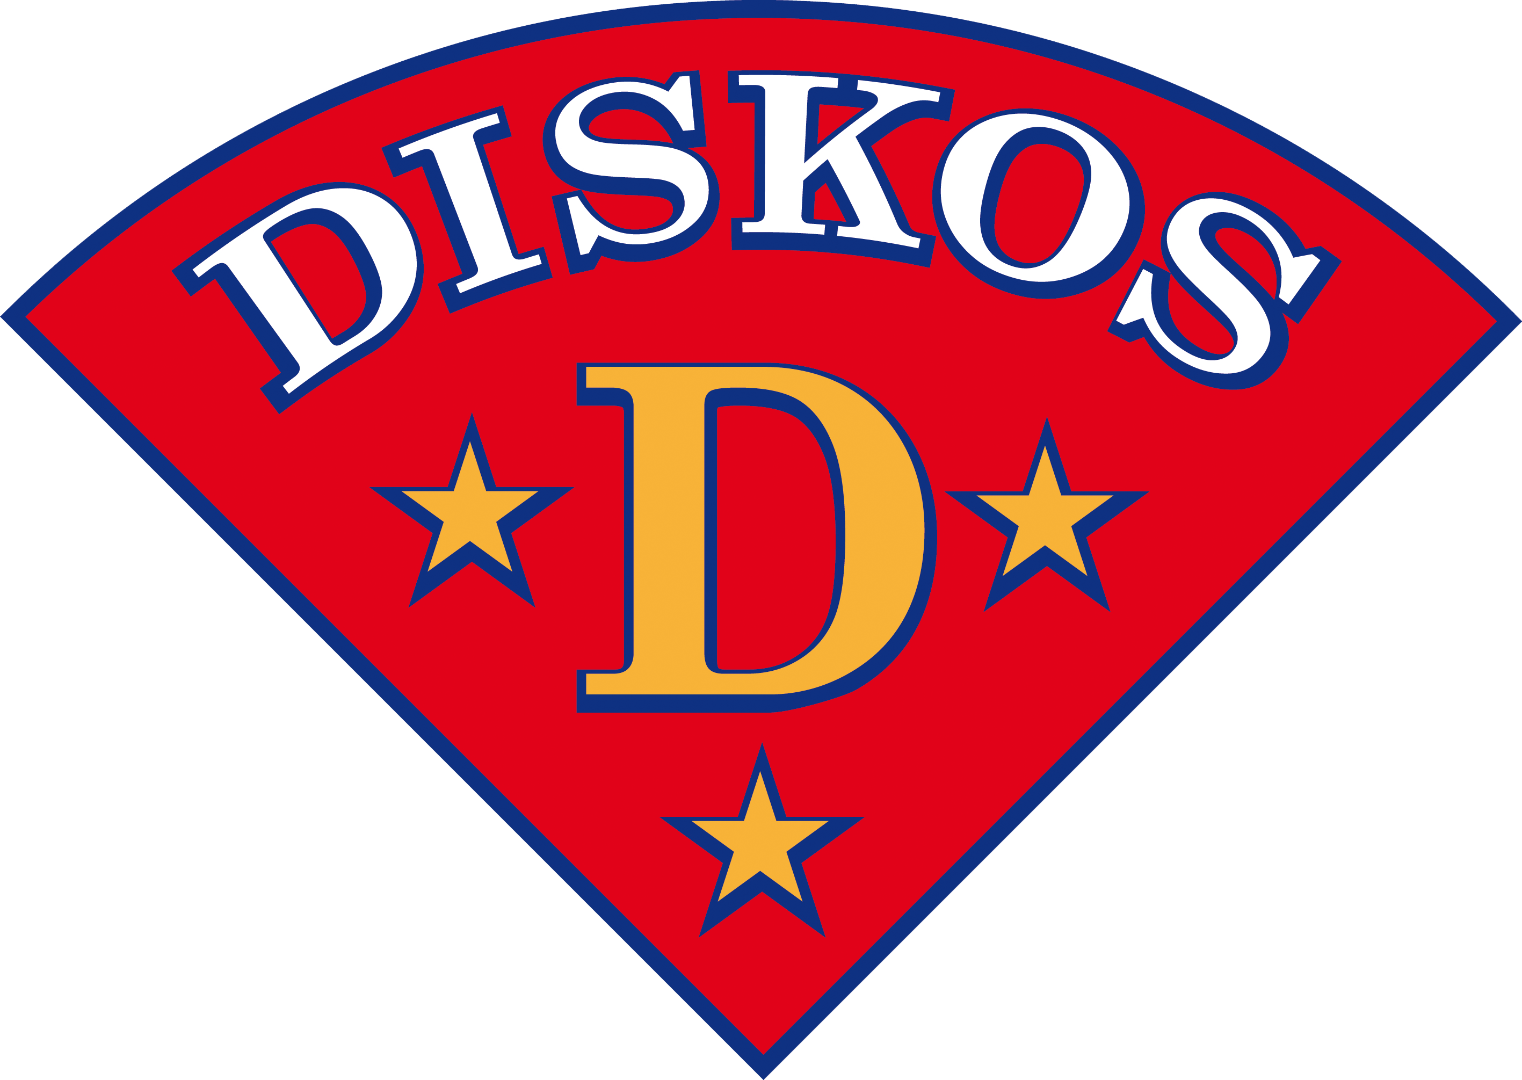 Diskos C/-02 kaudella 2017-2018